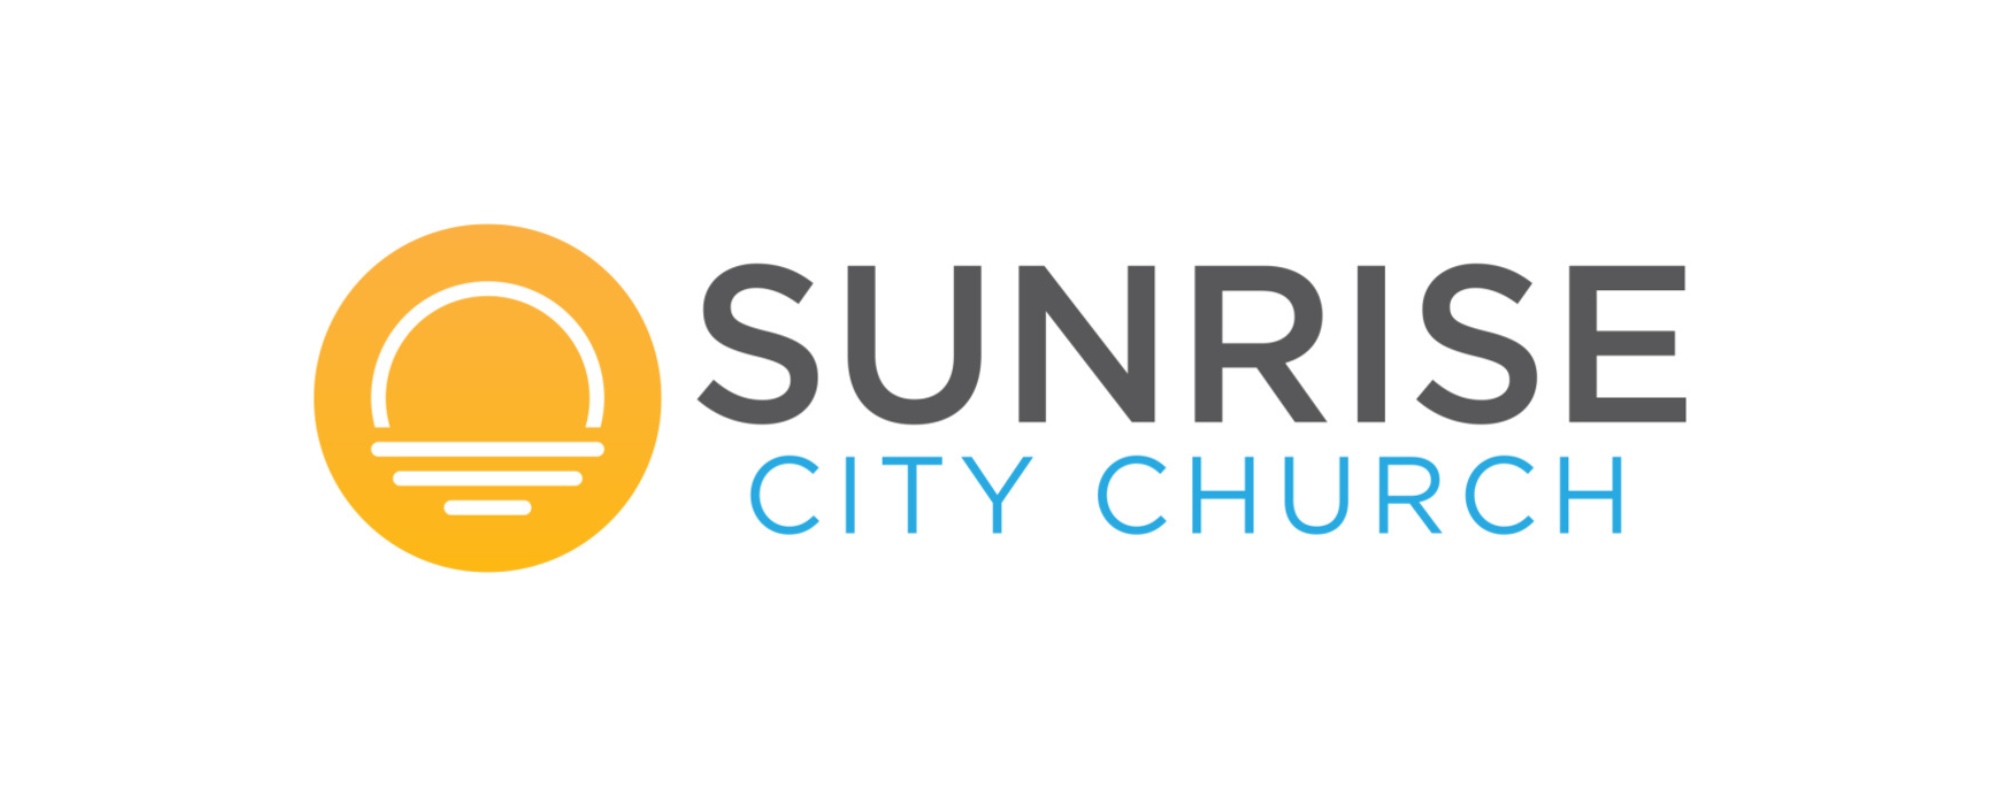 The Church Logo Design of Sunrise City Church